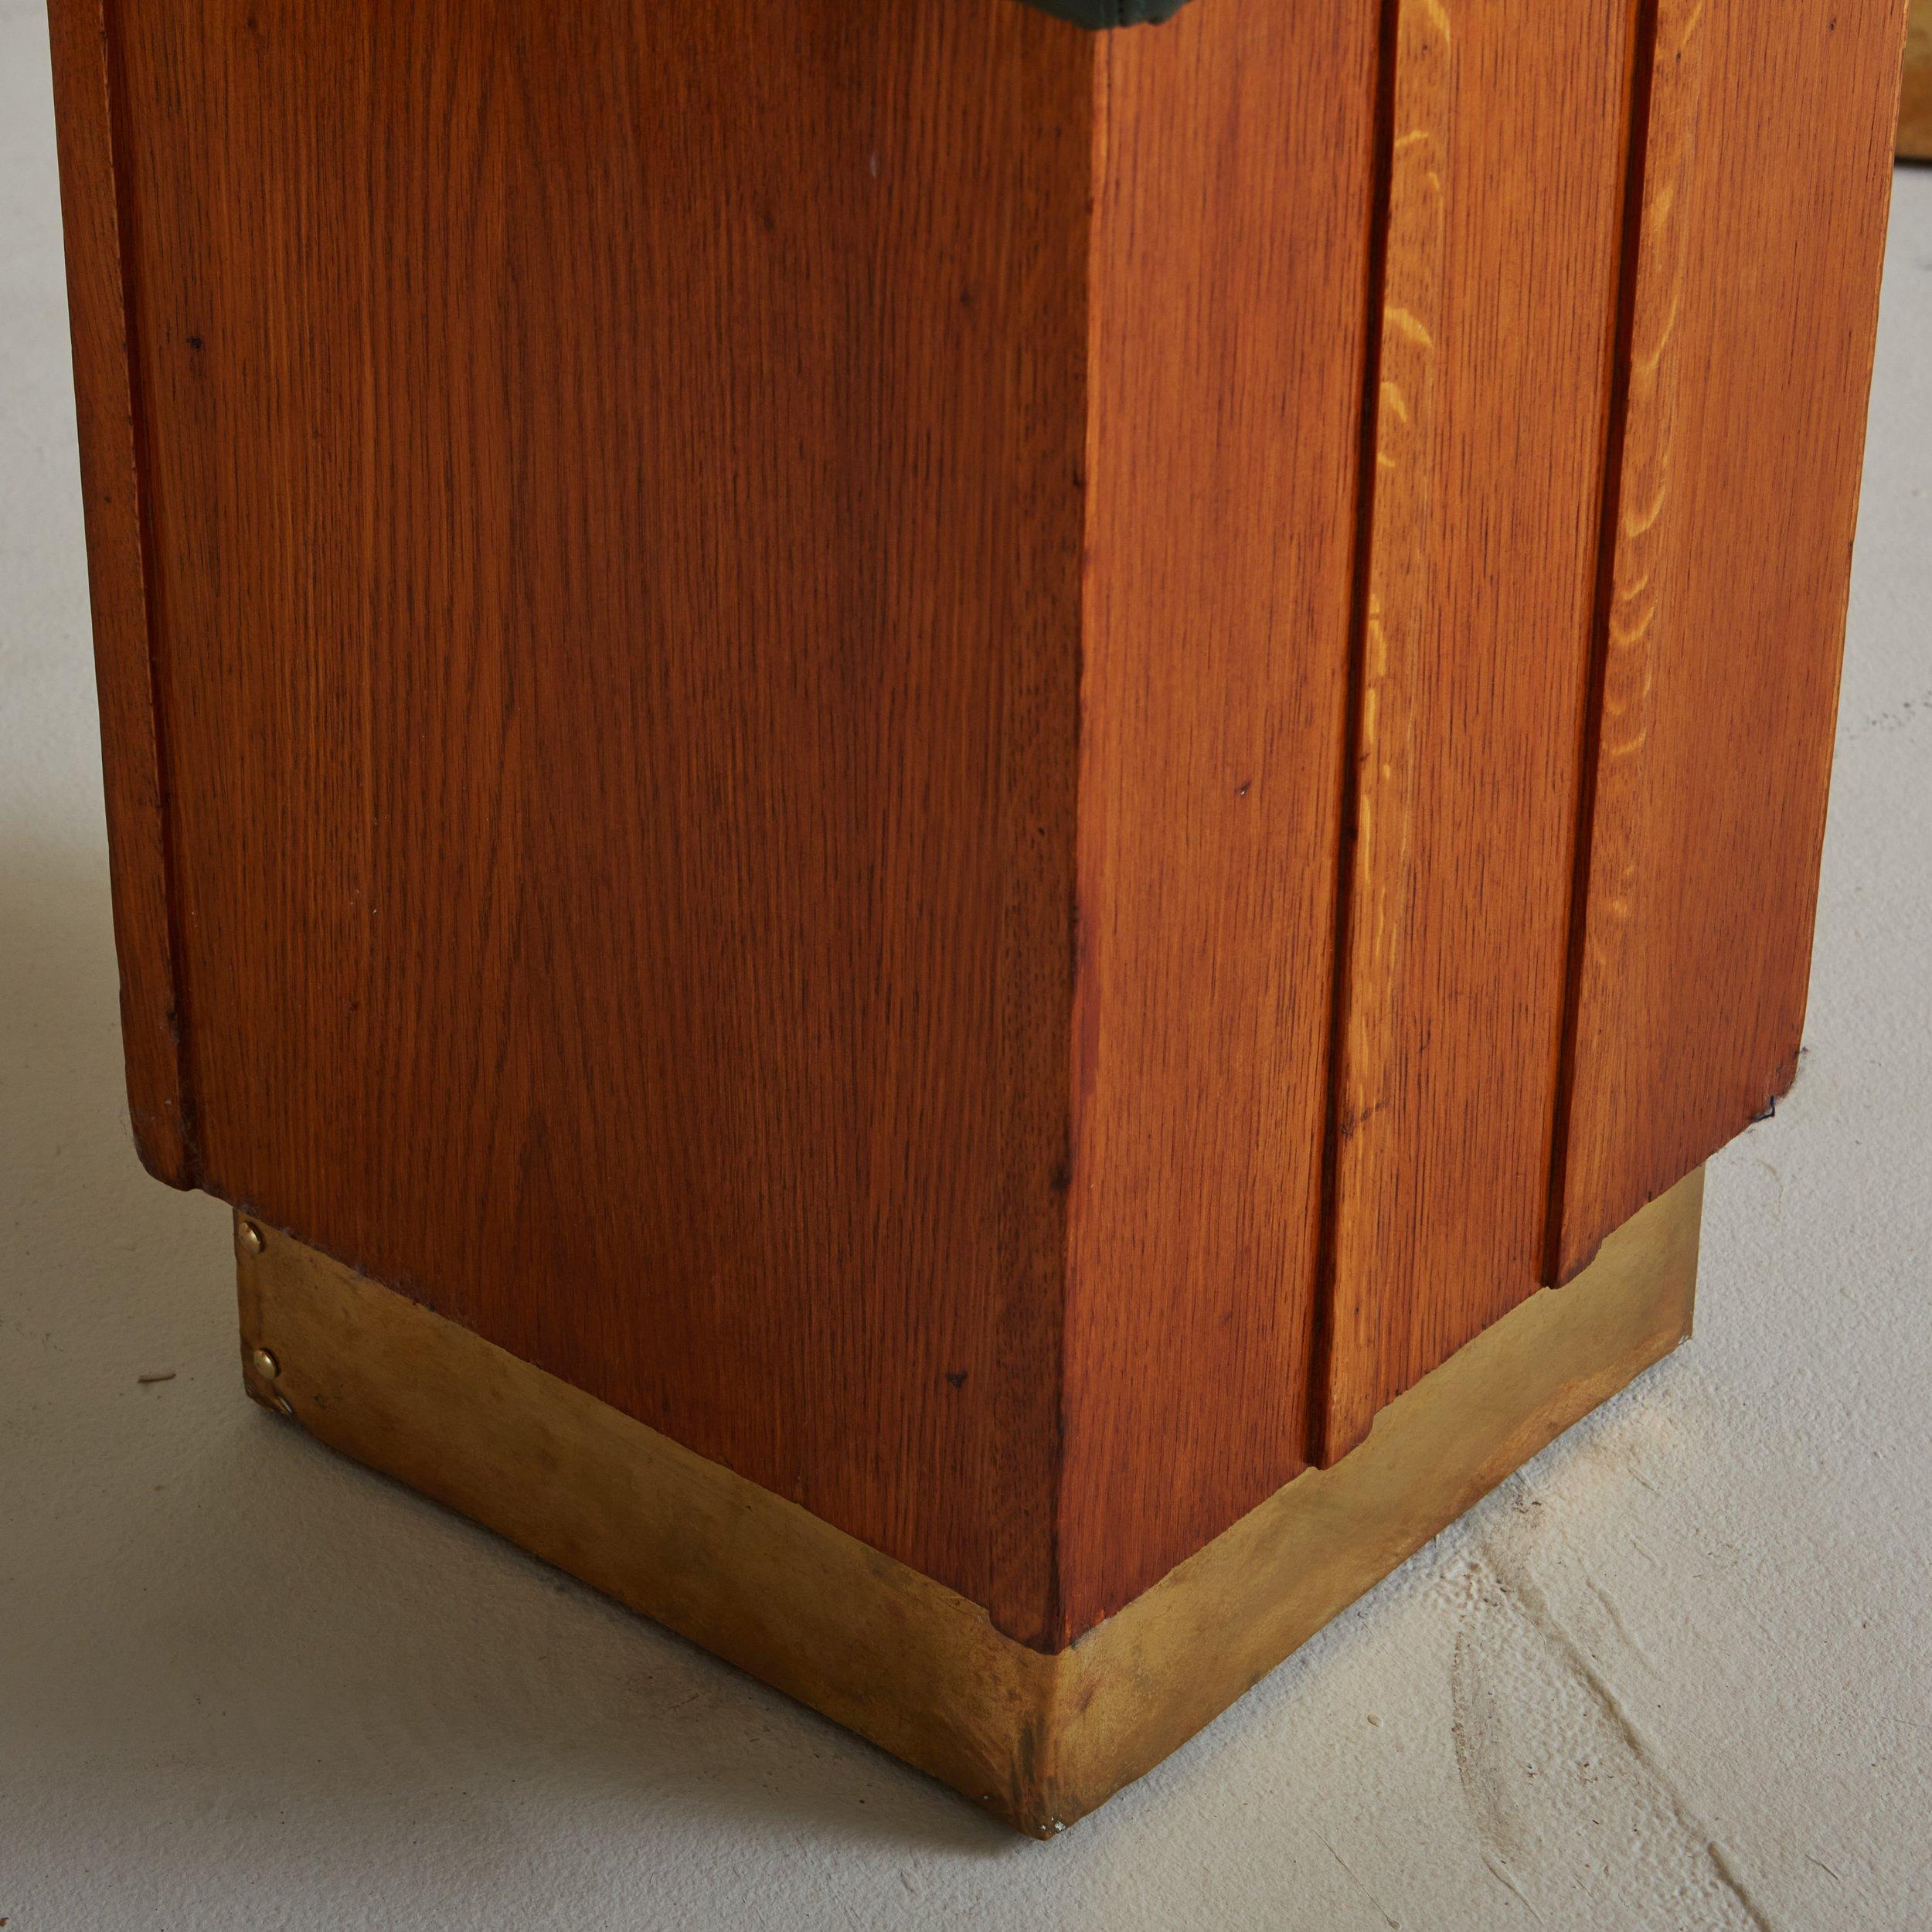 Hocker aus Holz + grünem Leder mit Messingfuß, Italien 1950er Jahre – 1 Stück verfügbar im Angebot 2